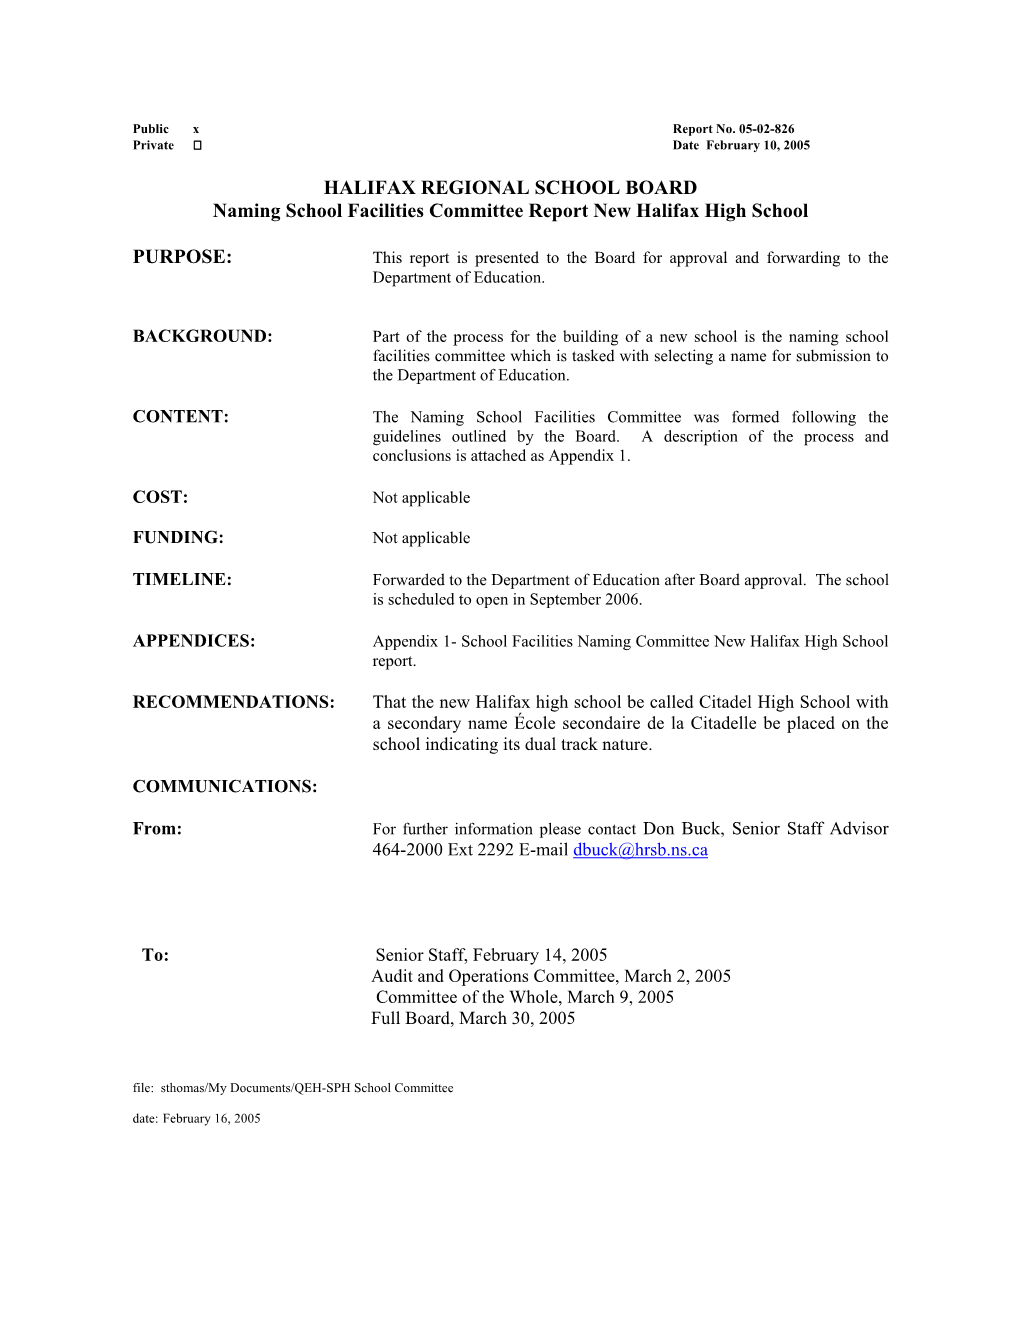 HALIFAX REGIONAL SCHOOL BOARD Naming School Facilities Committee Report New Halifax High School